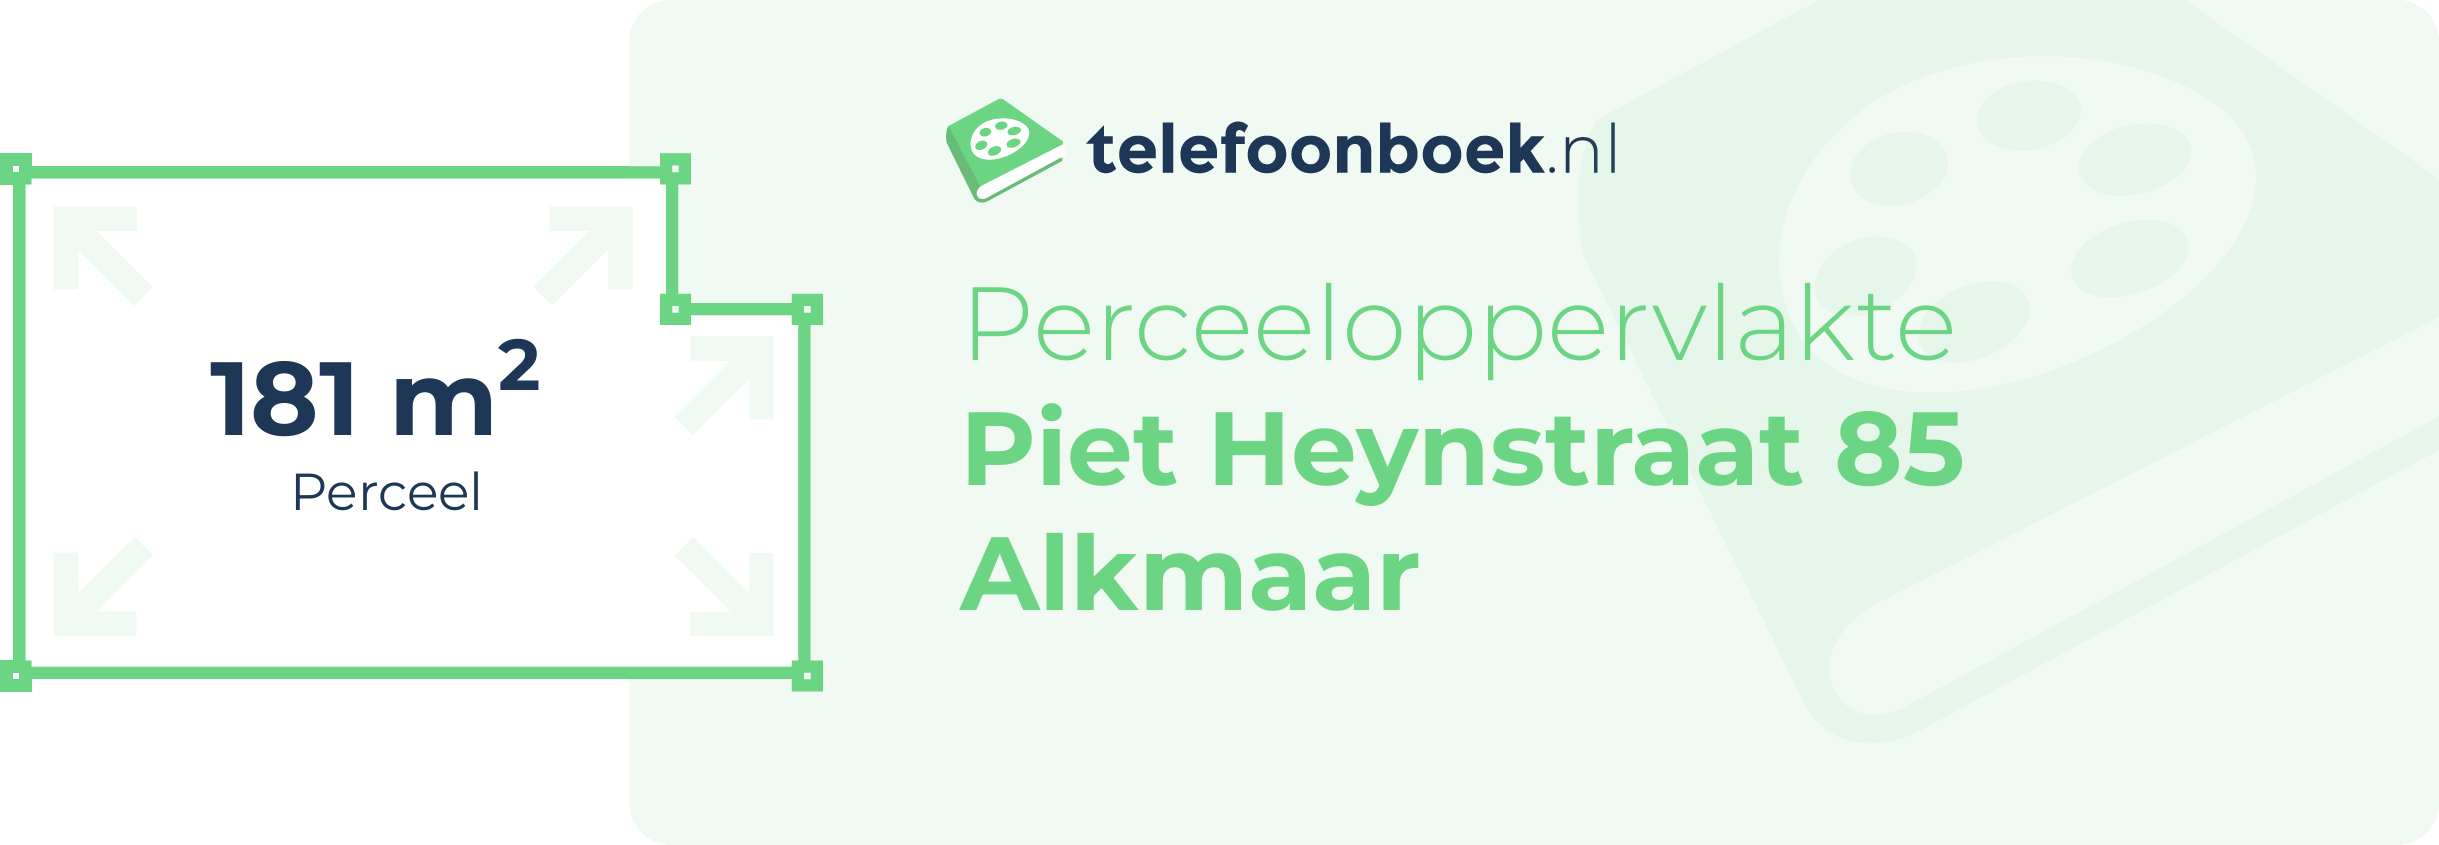 Perceeloppervlakte Piet Heynstraat 85 Alkmaar